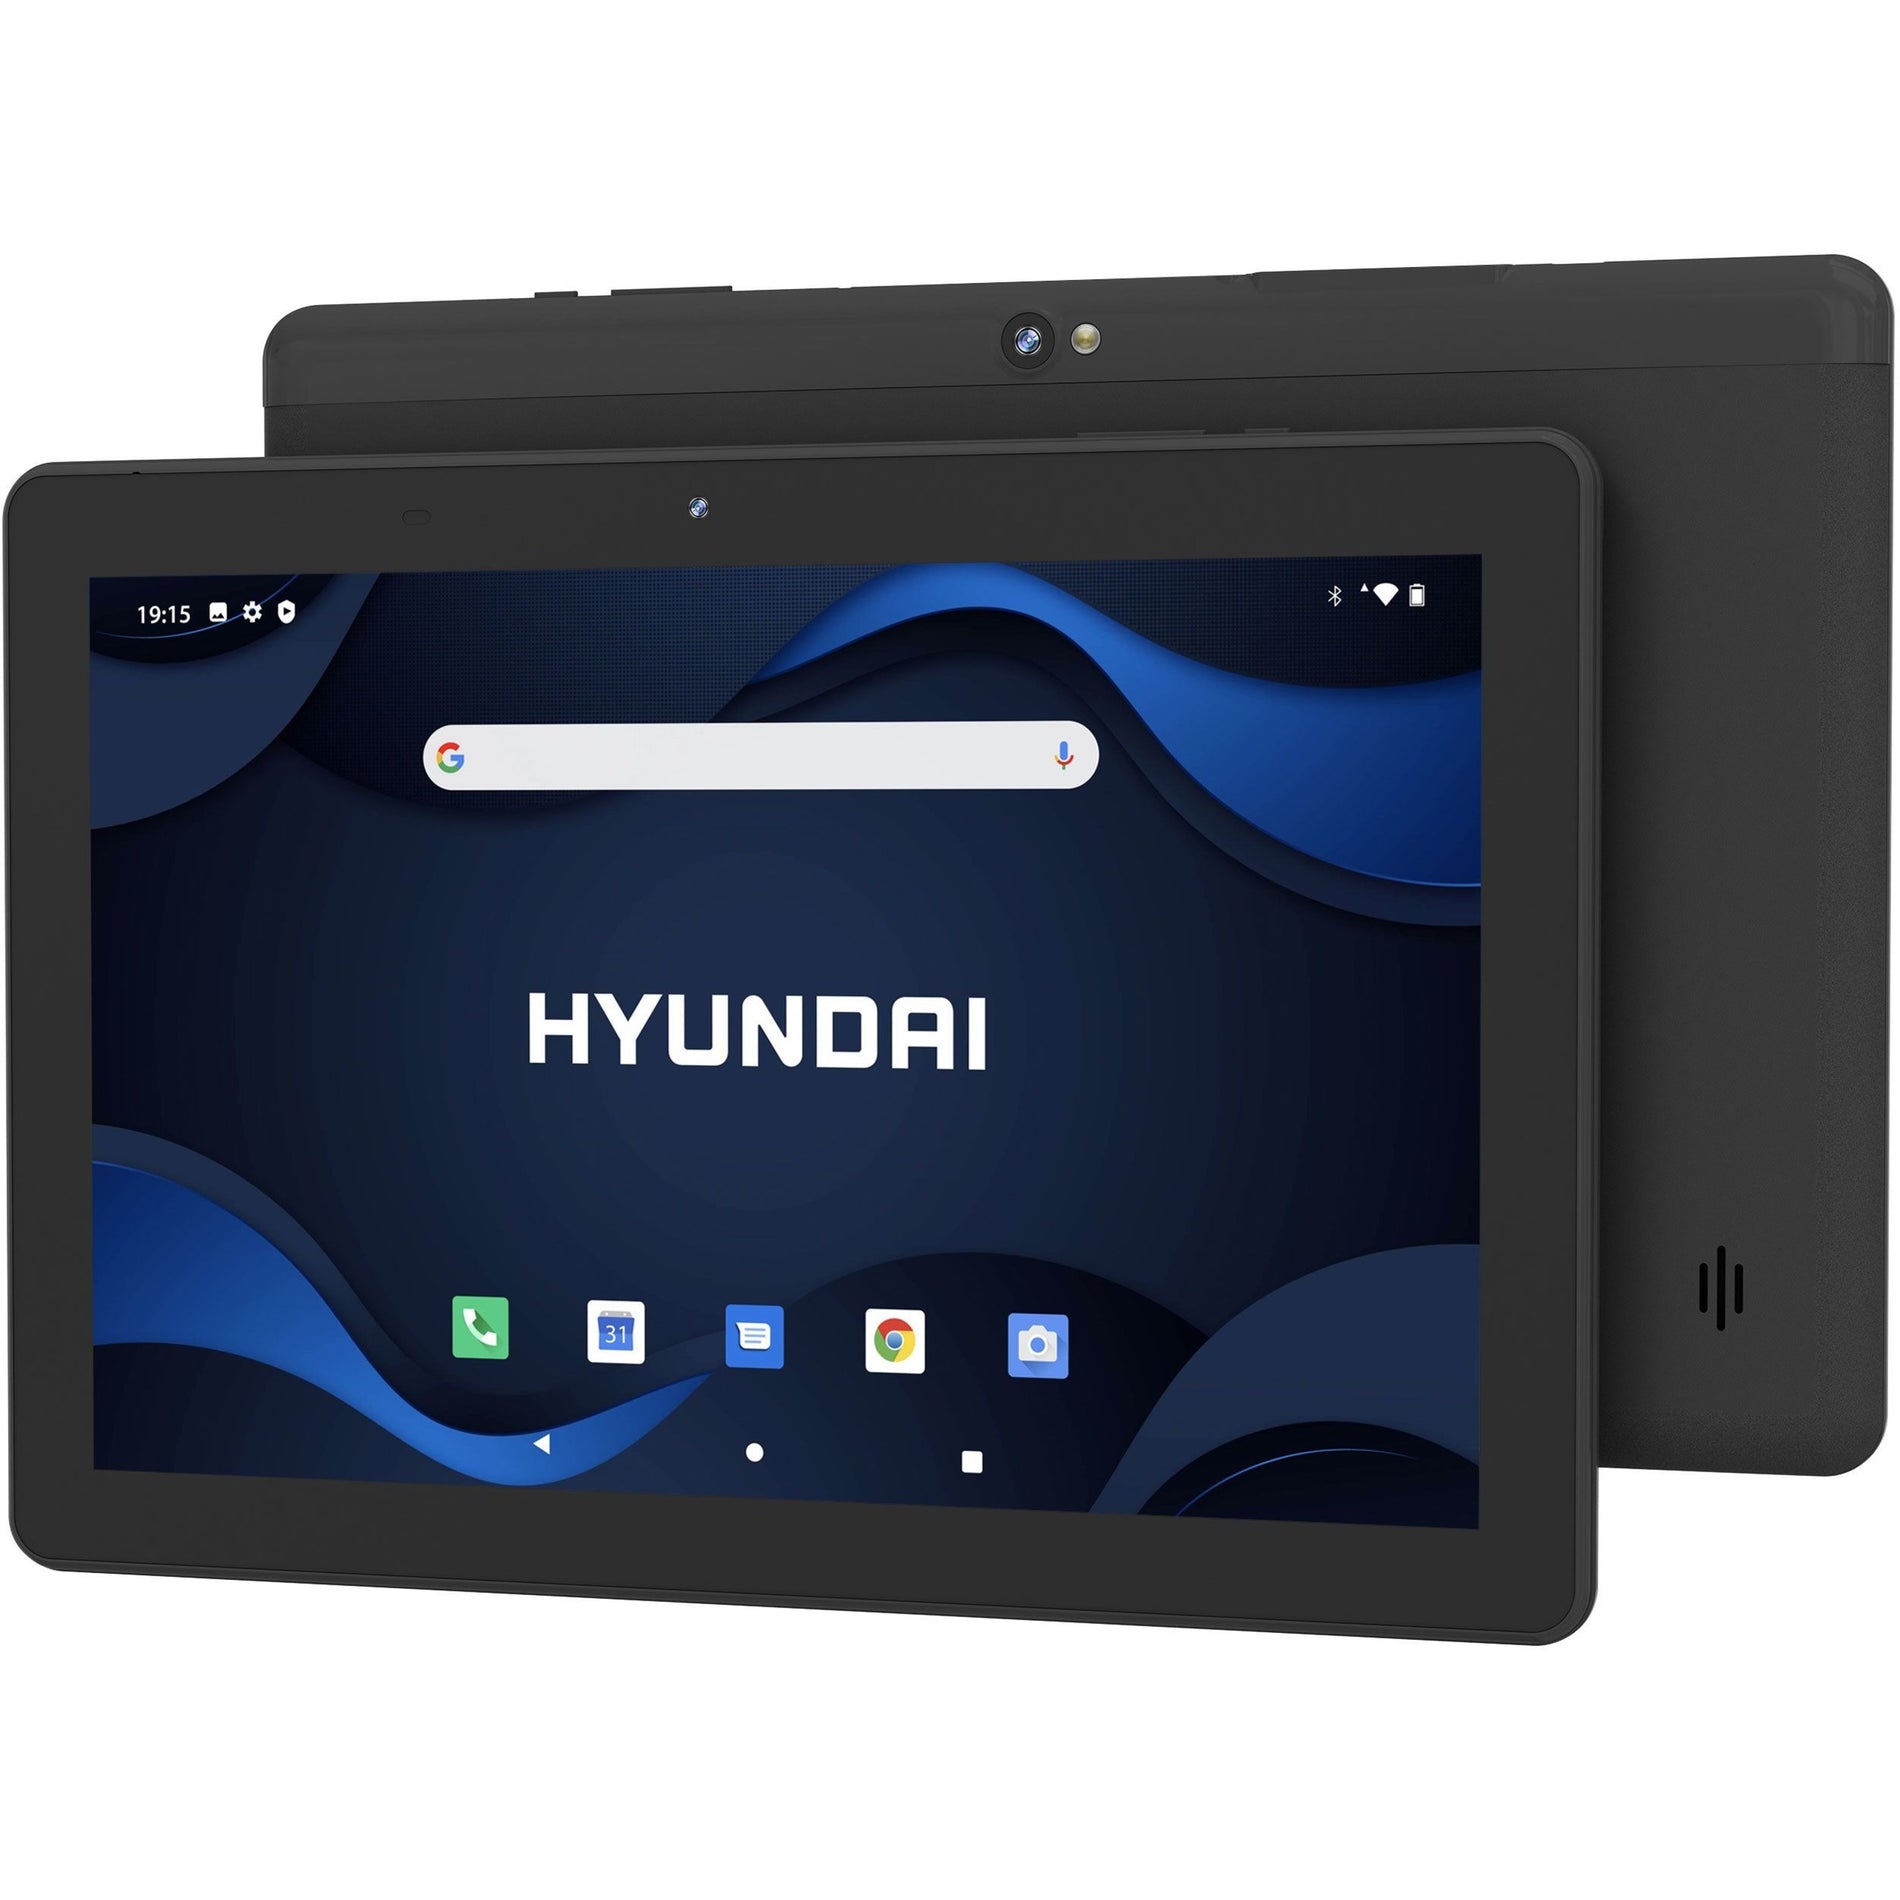 Hyundai HyTab Plus 10LB3 10.1" HD IPS Tablet - Quad-Core Processor, 2GB RAM, 32GB Storage, LTE, Android 11 Go Edition [Discontinued]